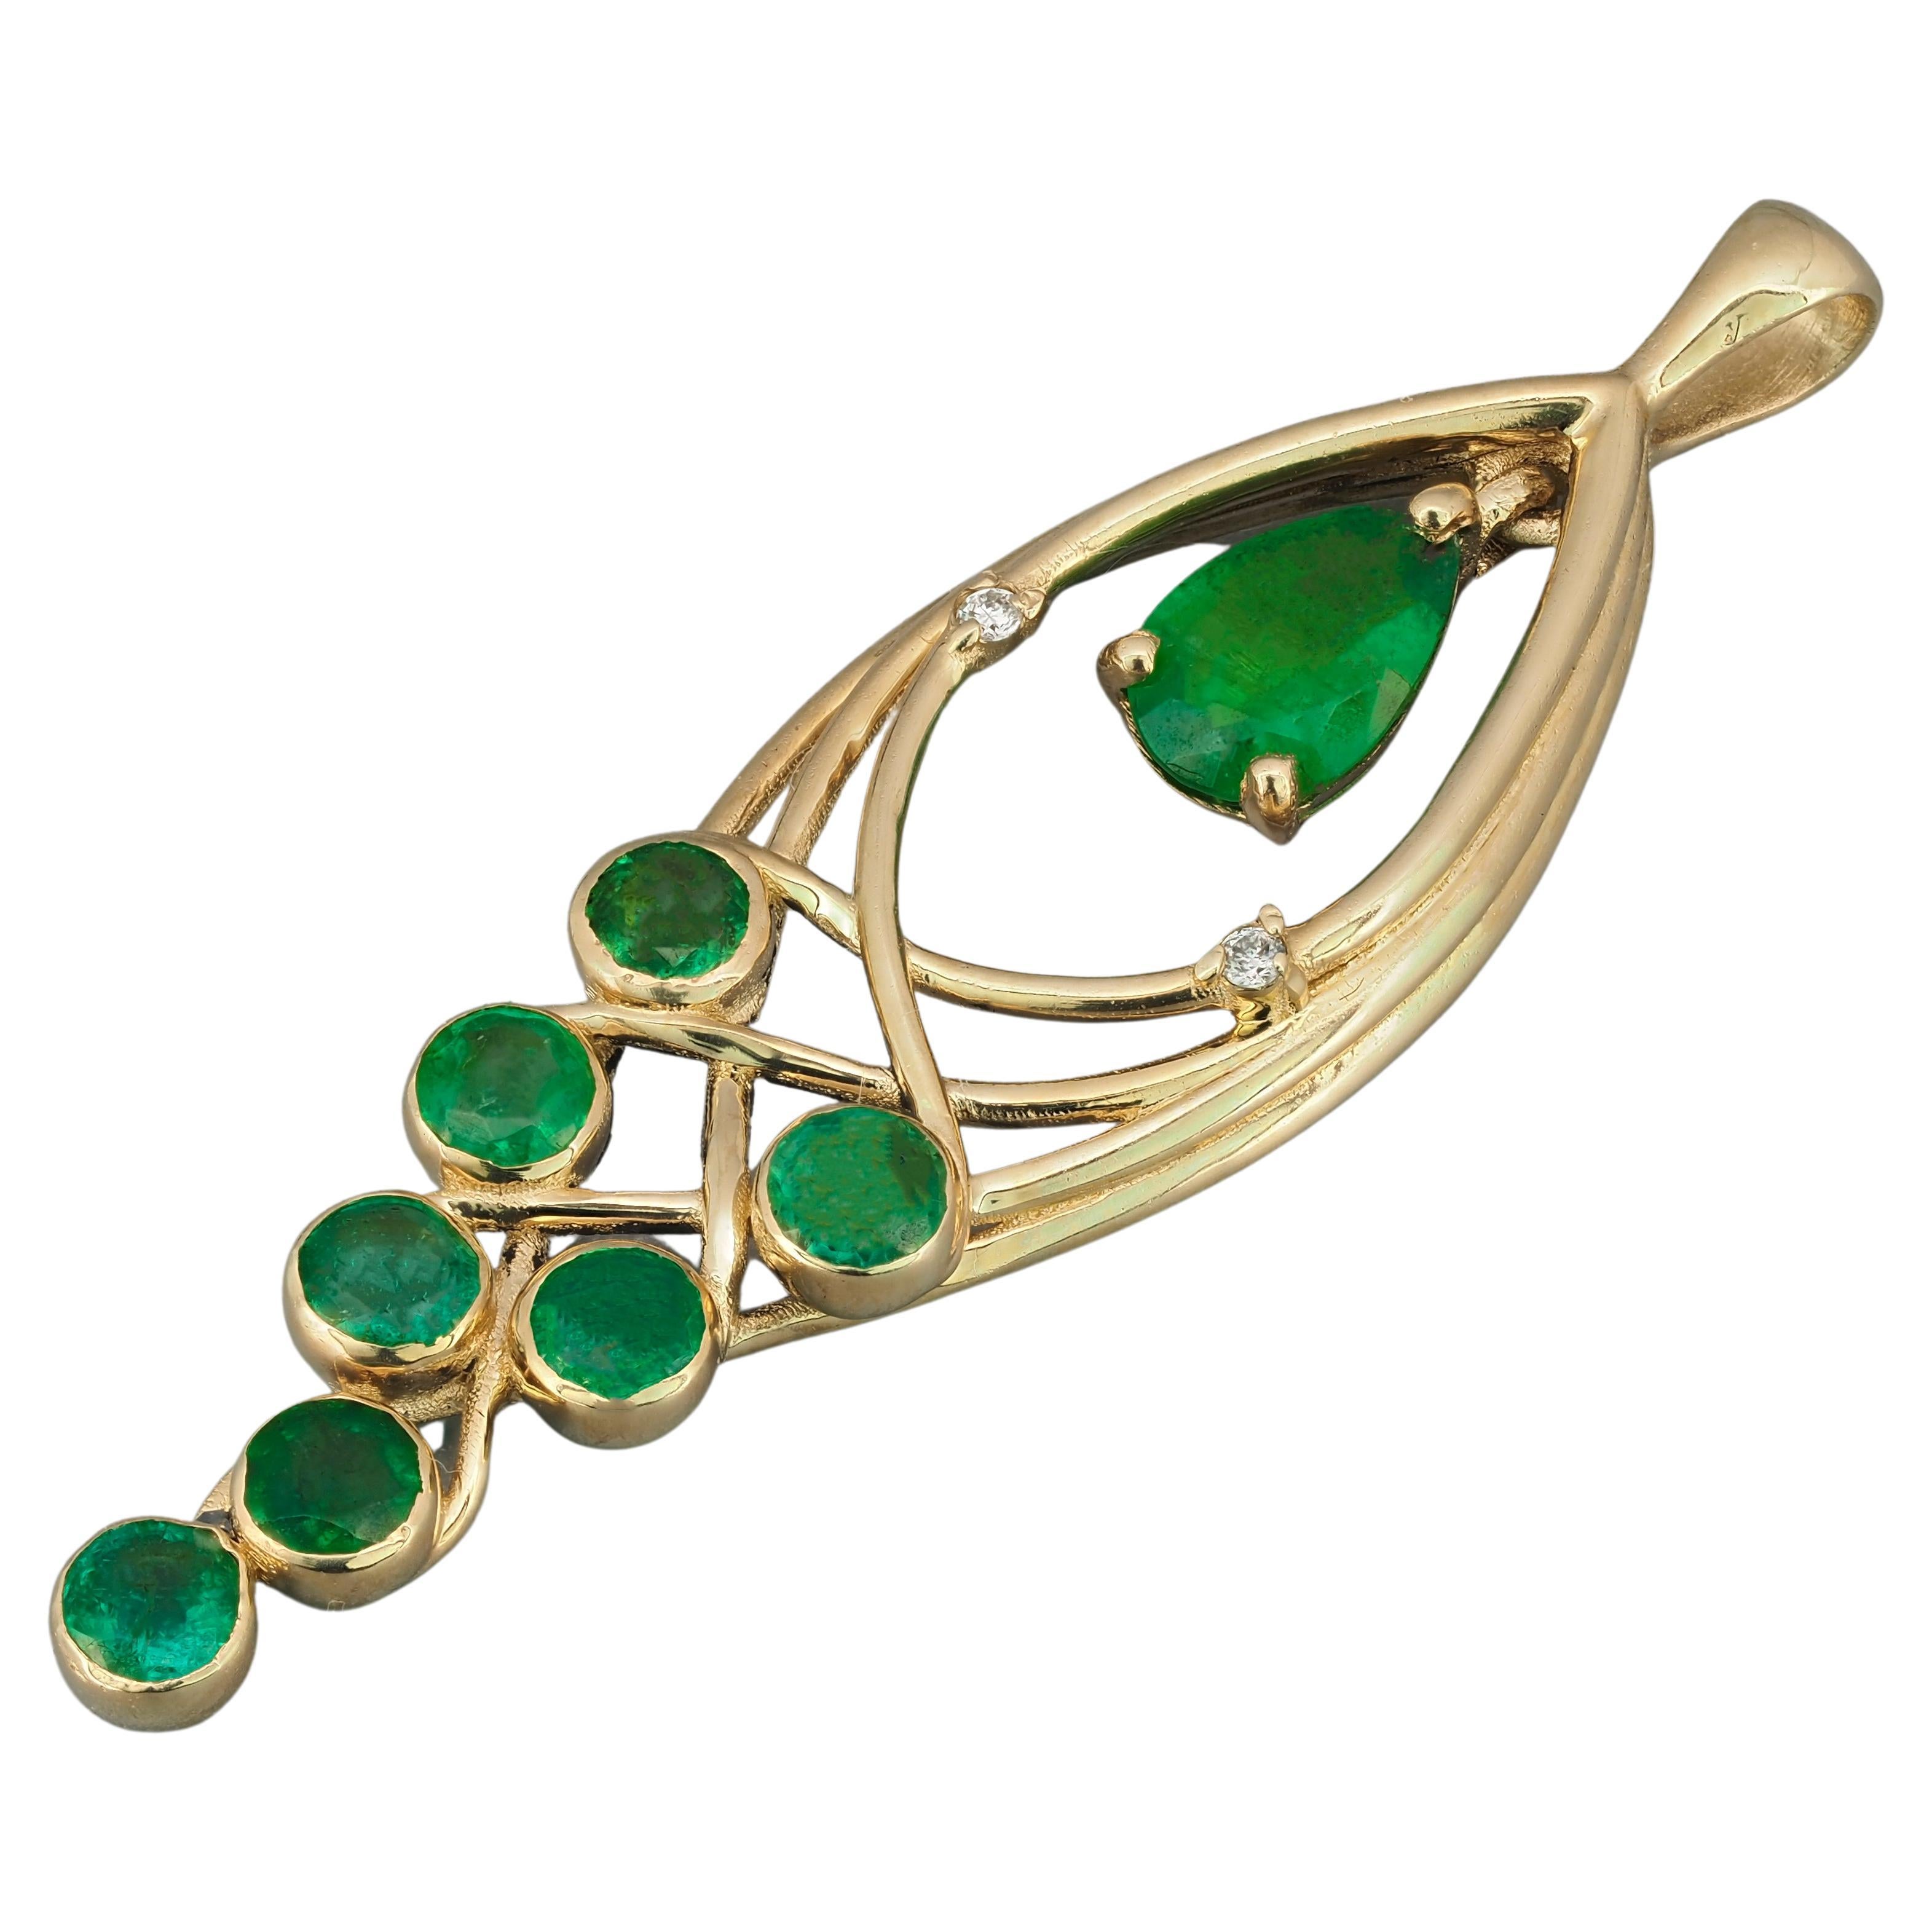 14k Gold Pendant with Emerald, Emeralds and Diamonds, Leaf Pendant